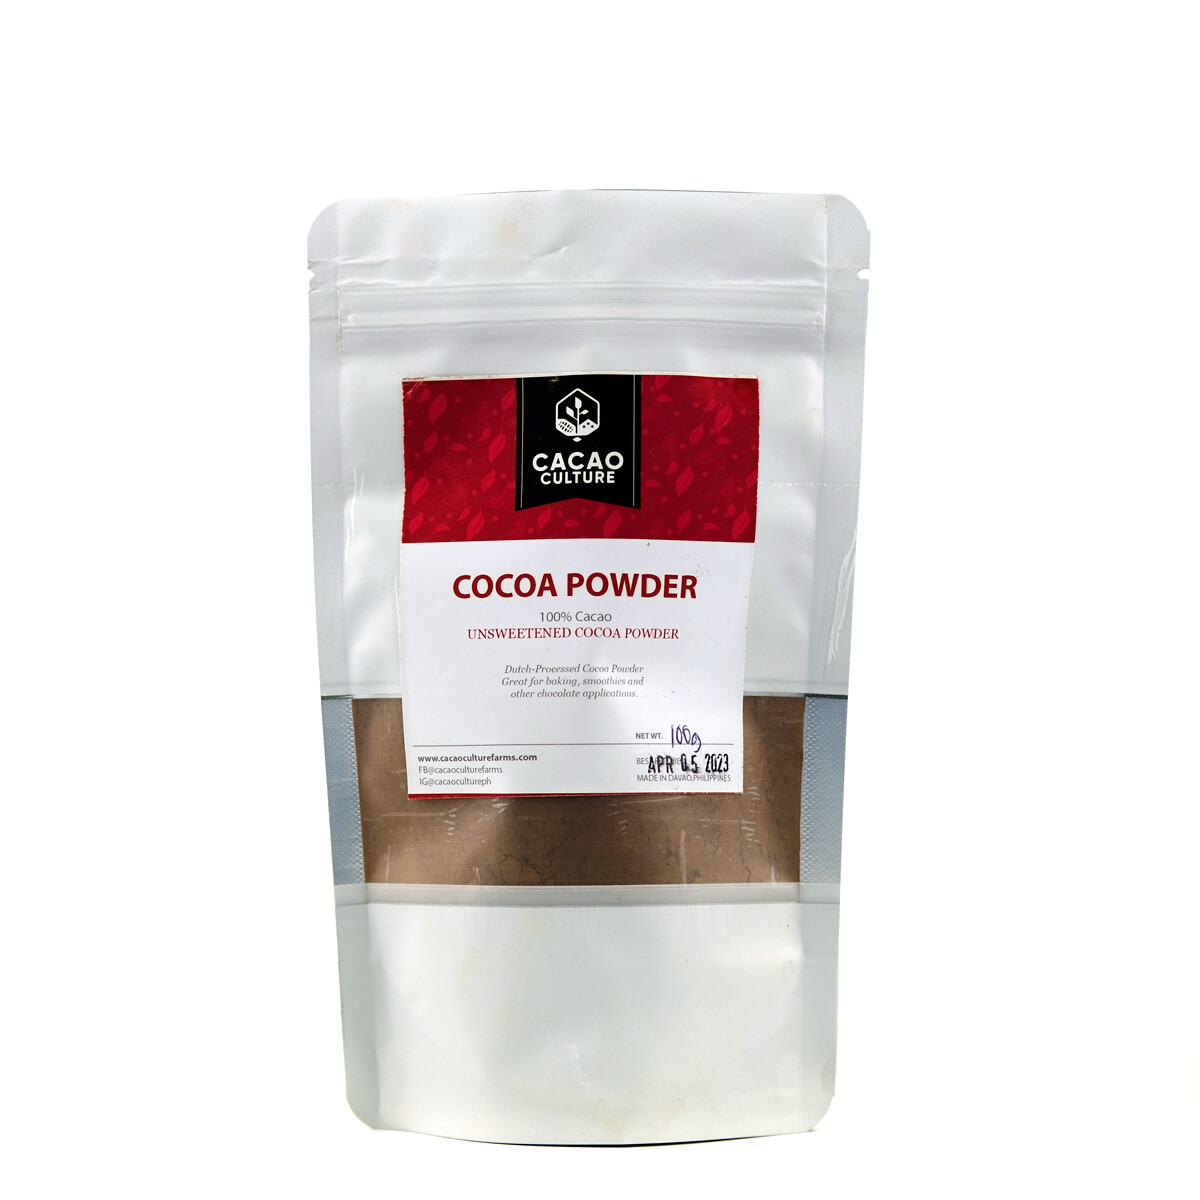 Cacao Culture Cocoa Powder Unsweetened